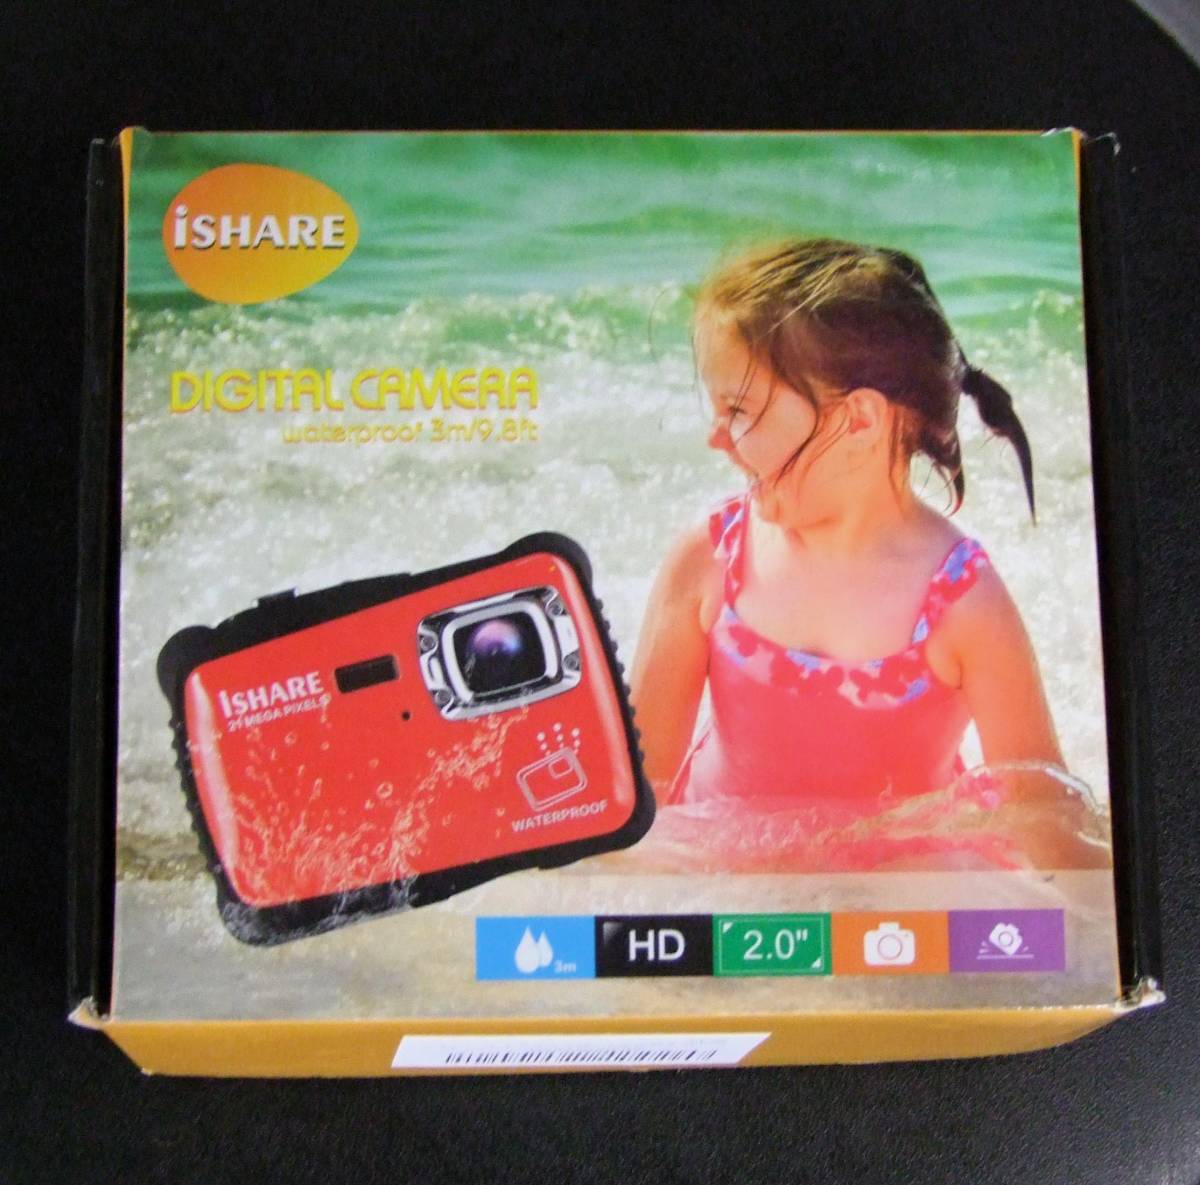 *iSHARE HD digital camera for children waterproof [ red ]